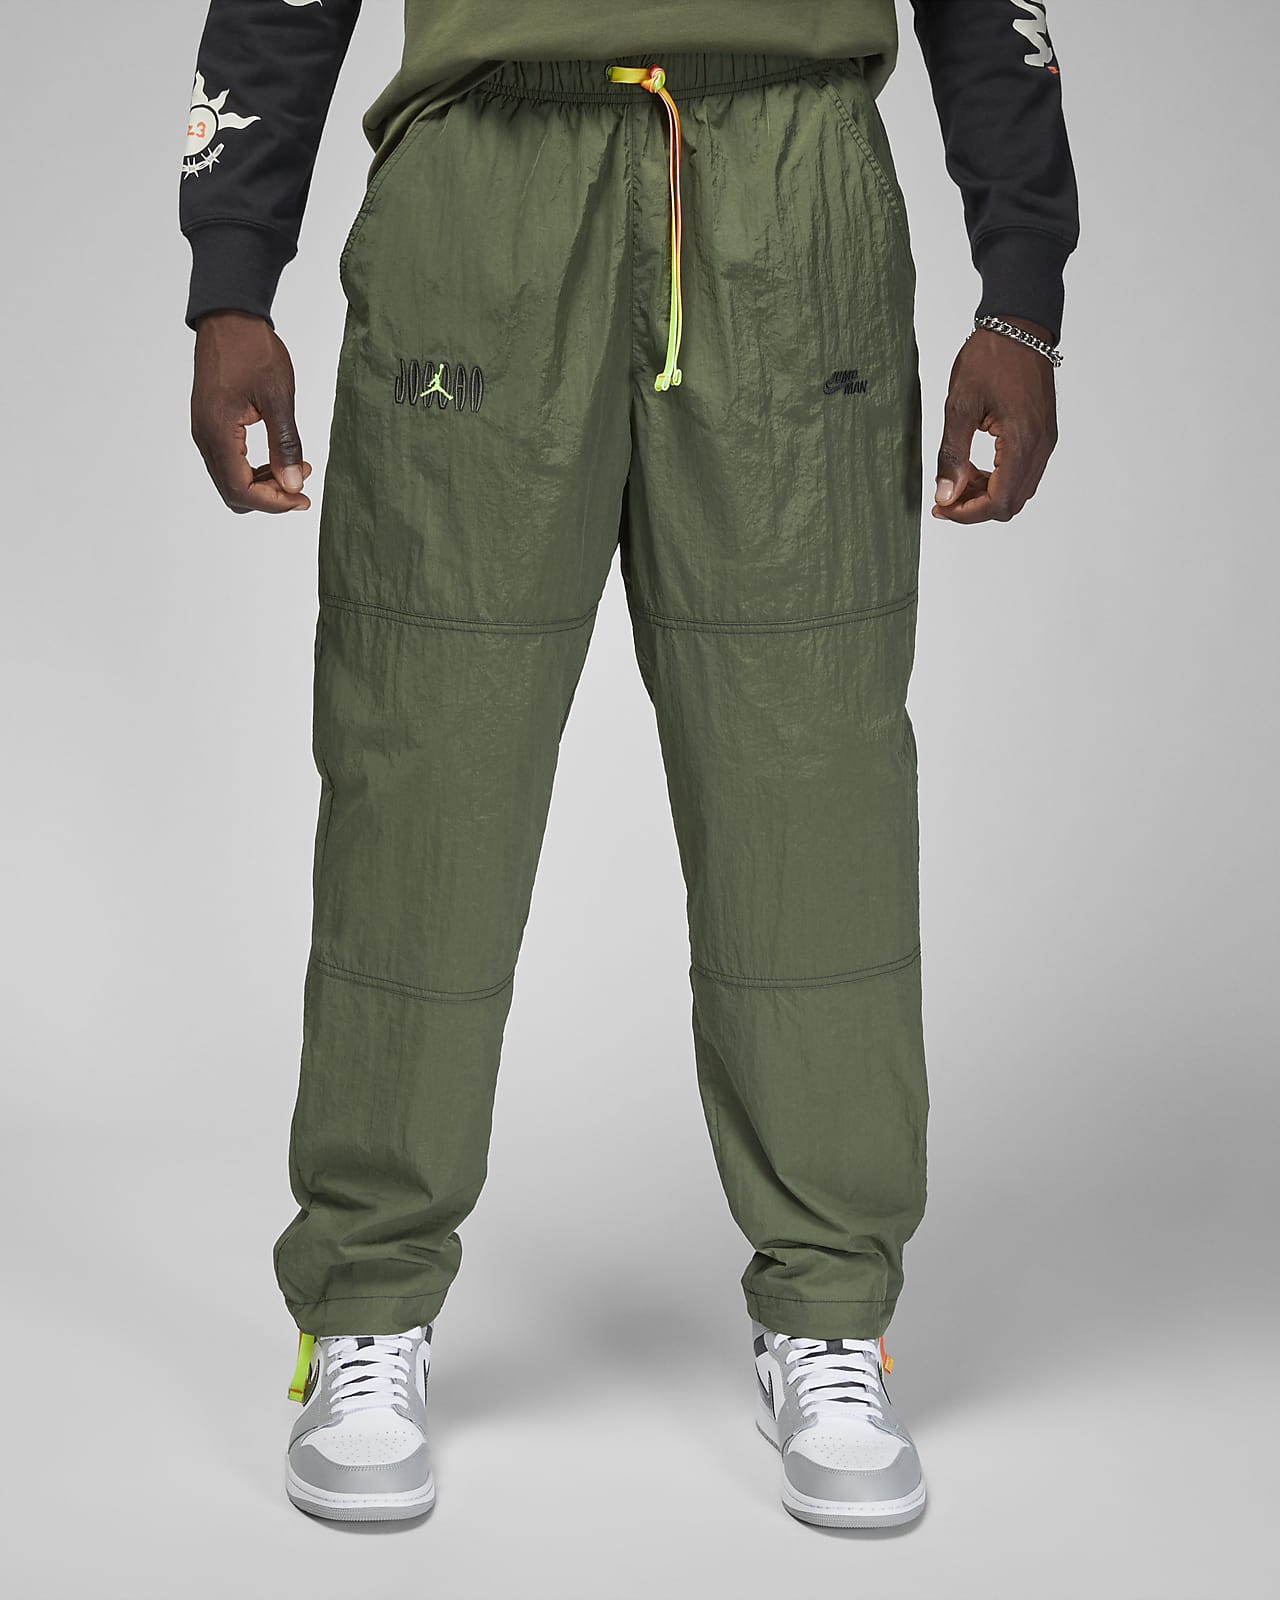 Jordan Pants  Tights Nikecom